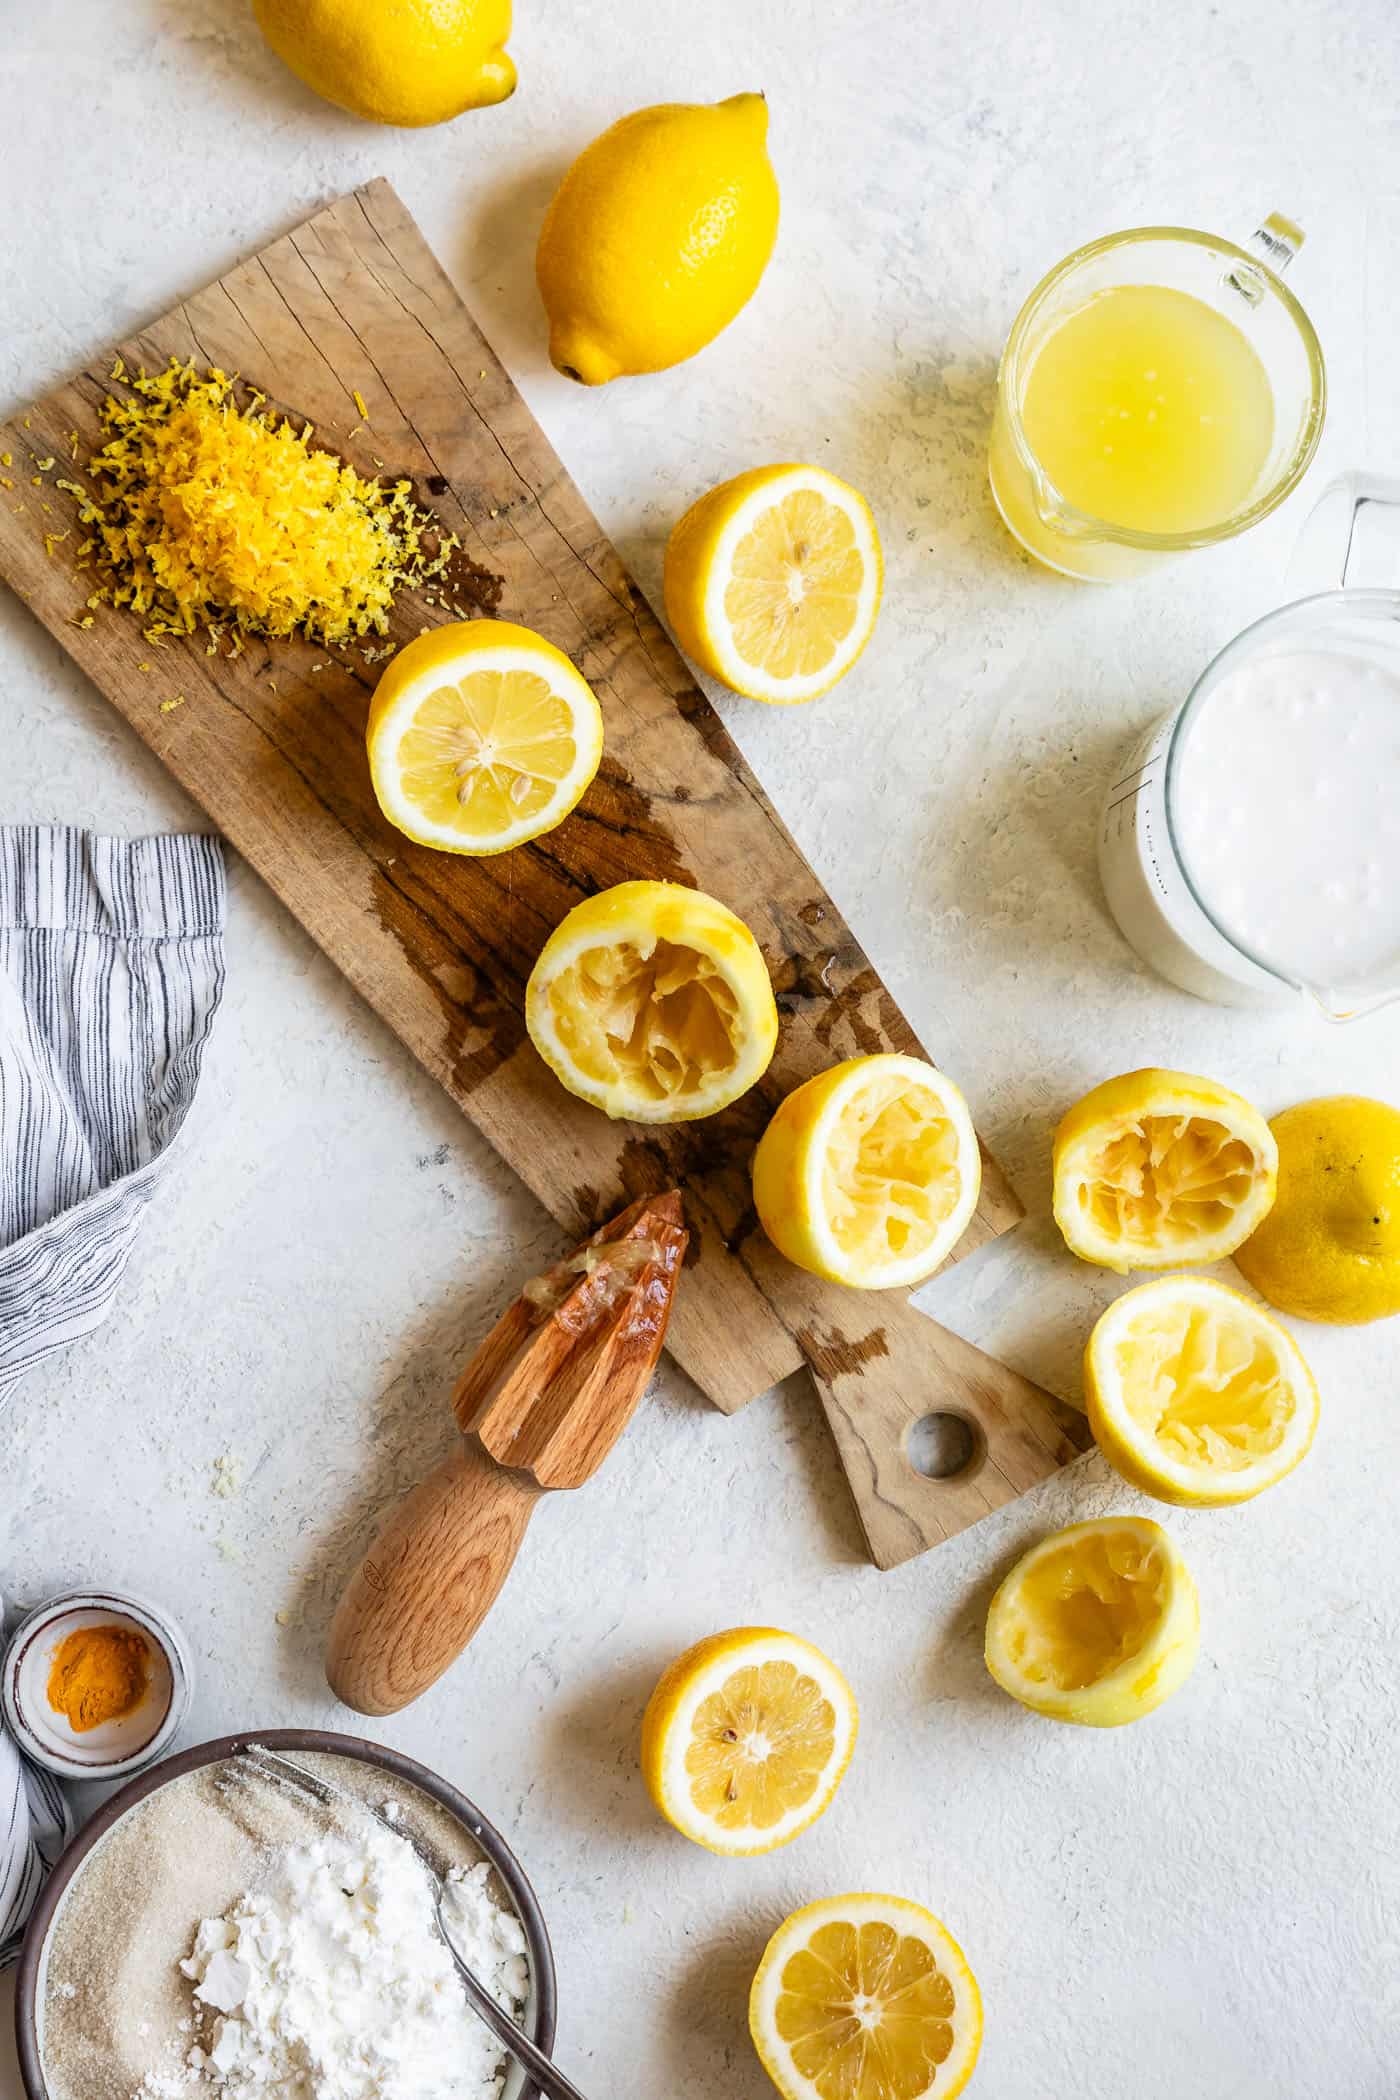 Ingredients for Eggless Lemon Curd